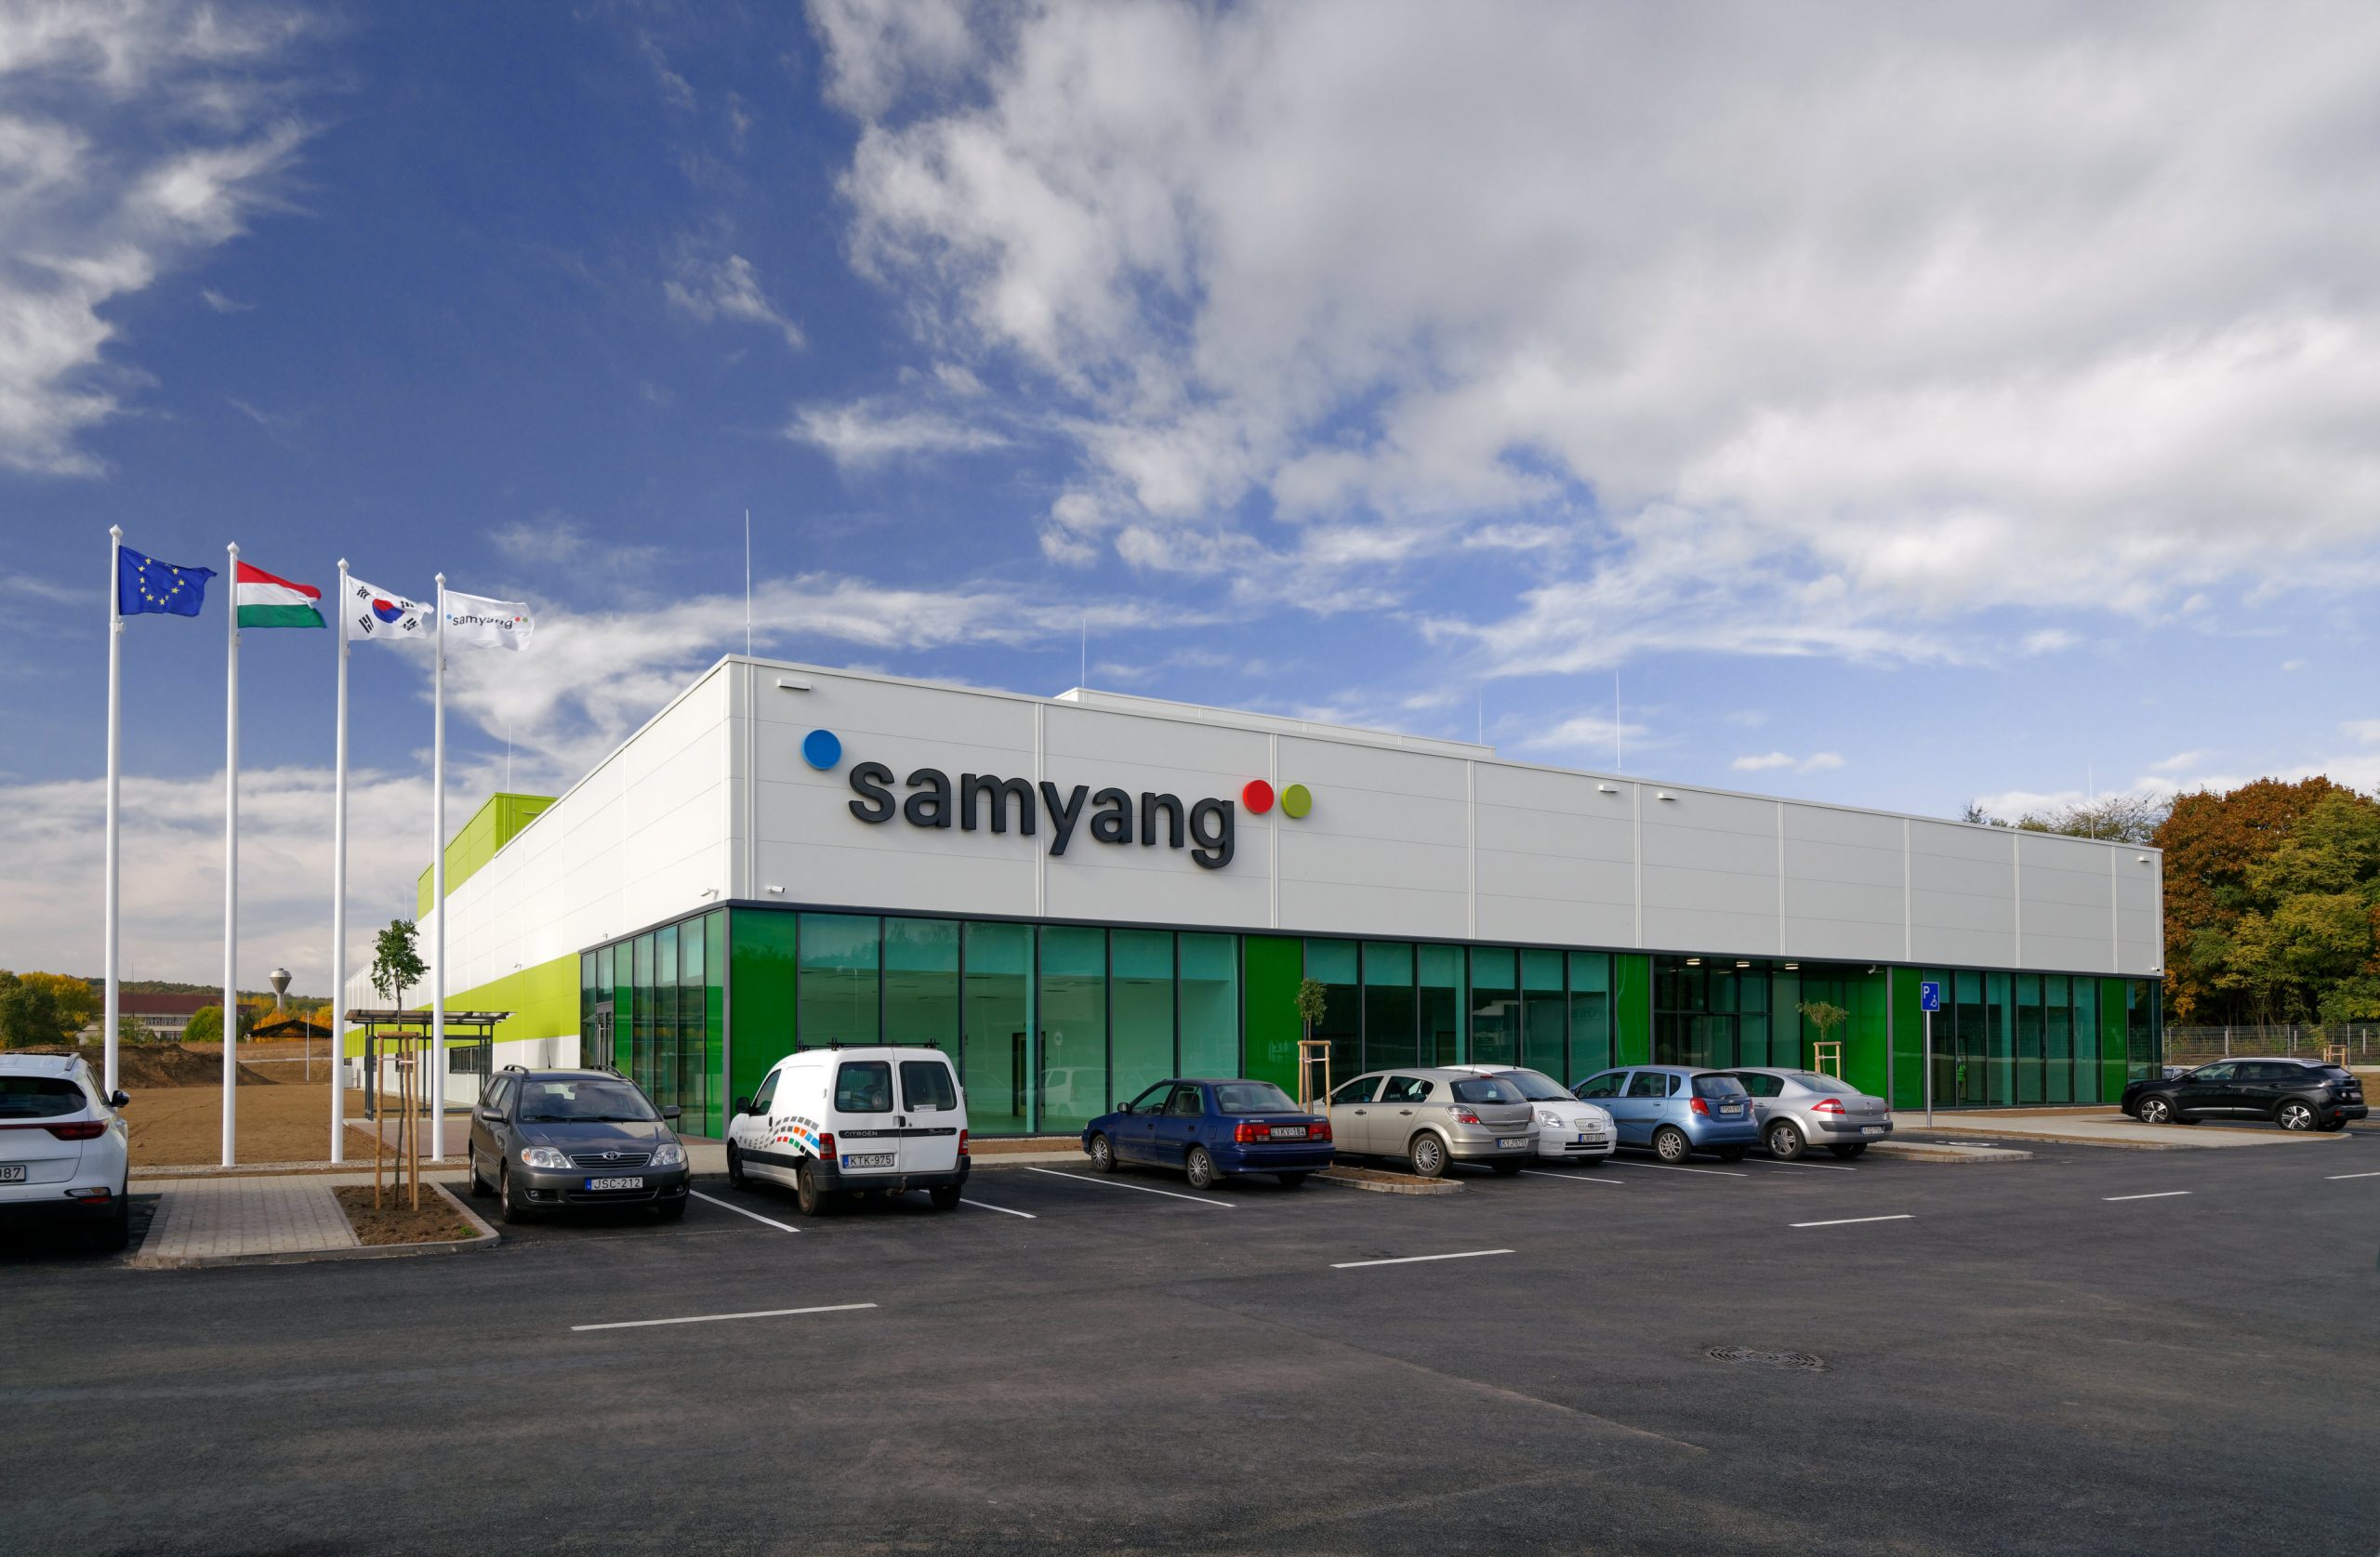 Samyang Biopharm factory in Gödöllő, Hungary built by Takenaka Europe, exterior view